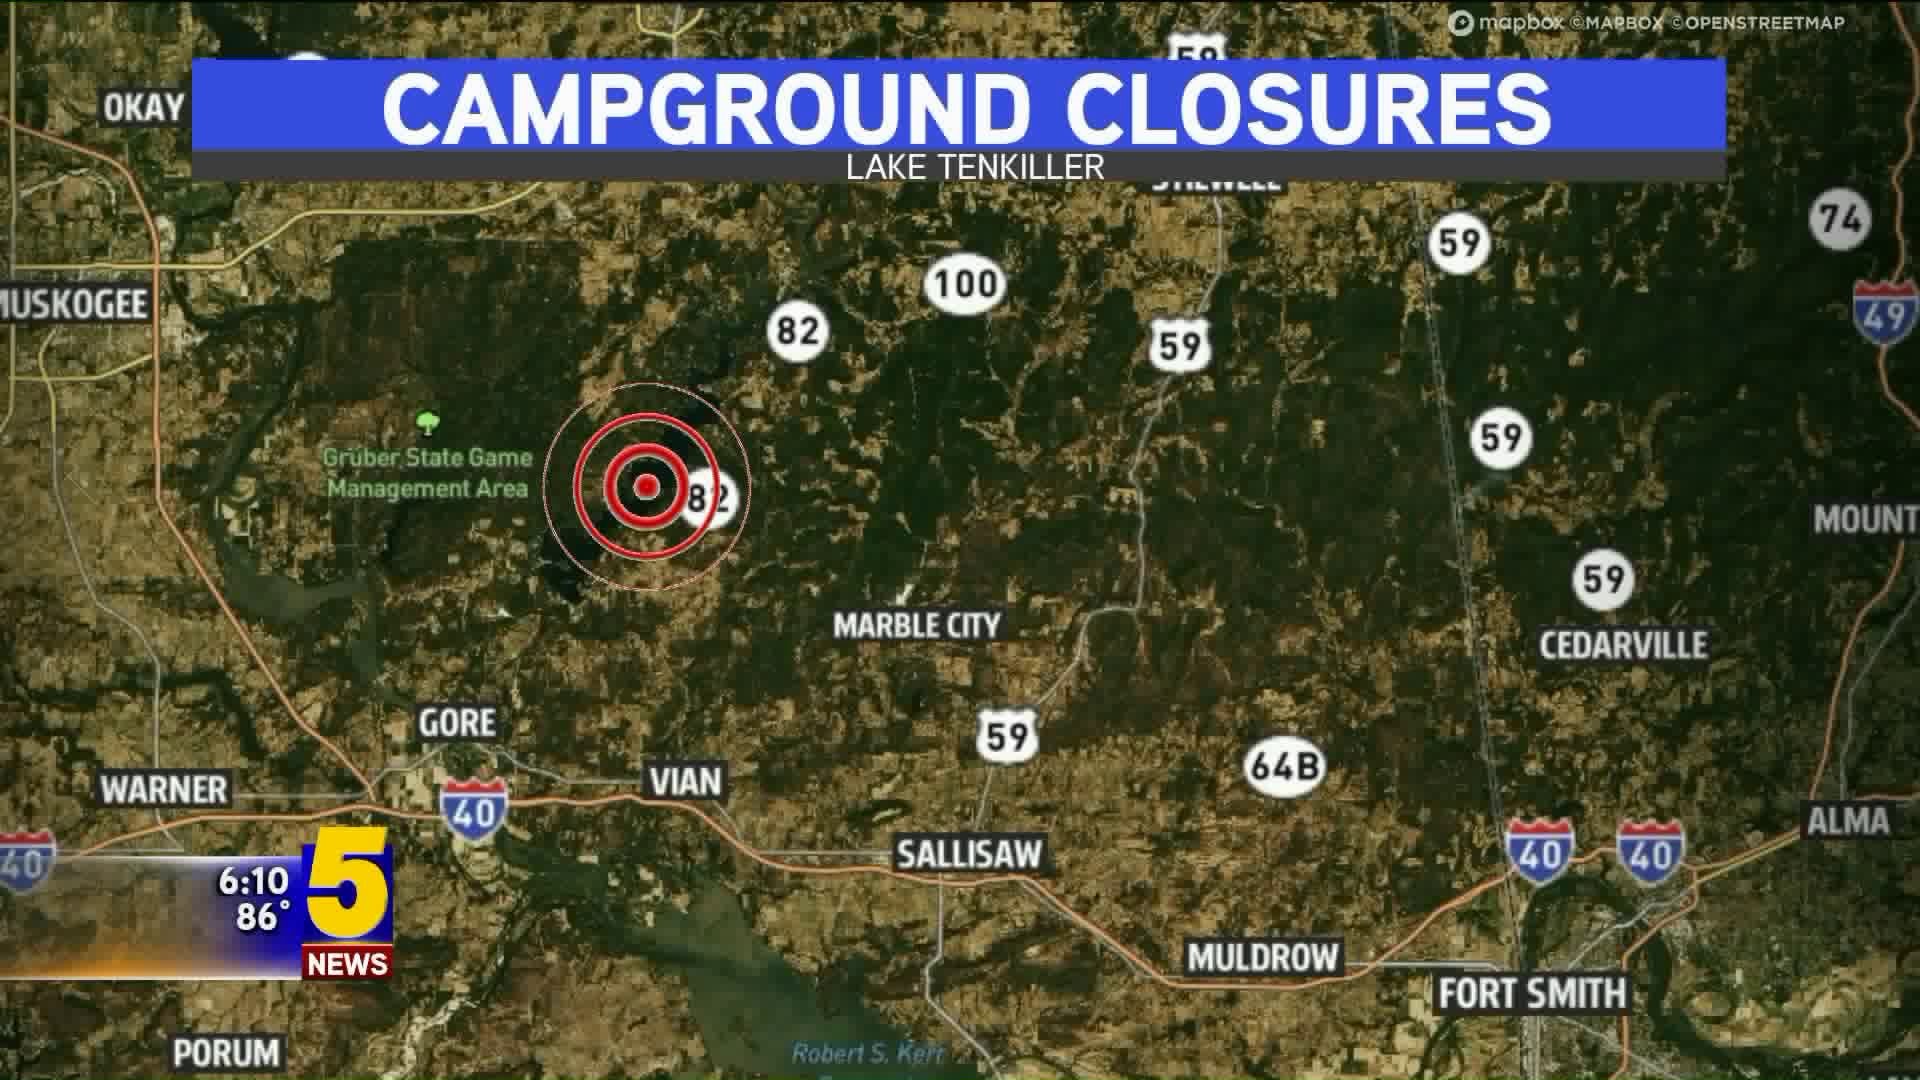 Lake Tenkiller Campground Closures